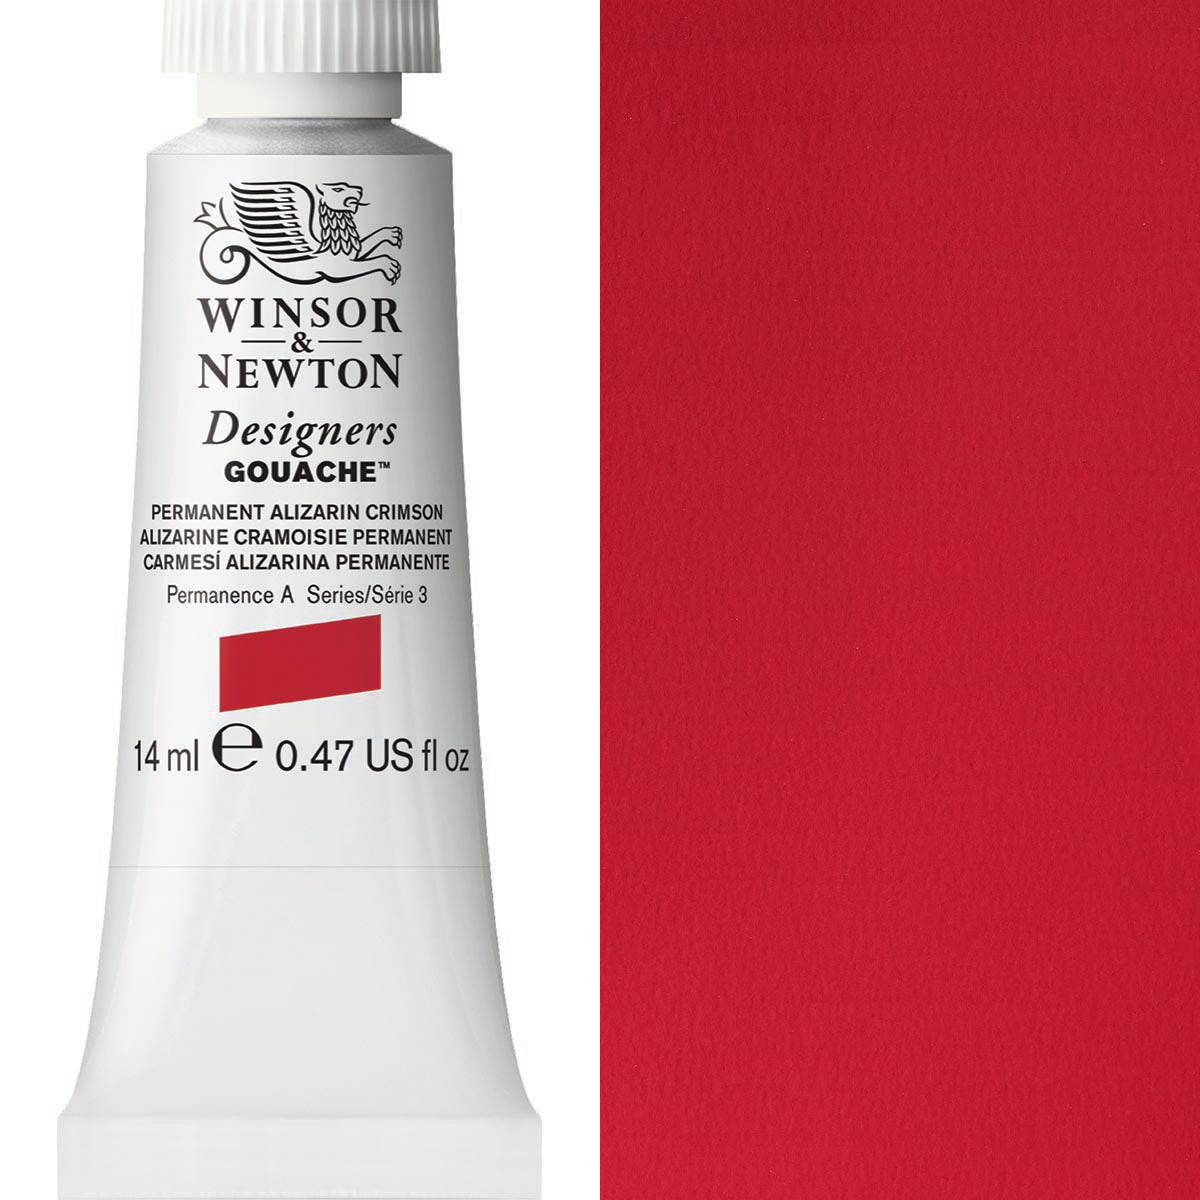 Winsor et Newton - Designers Gouache - 14 ml - Alizarin Crimson permanent